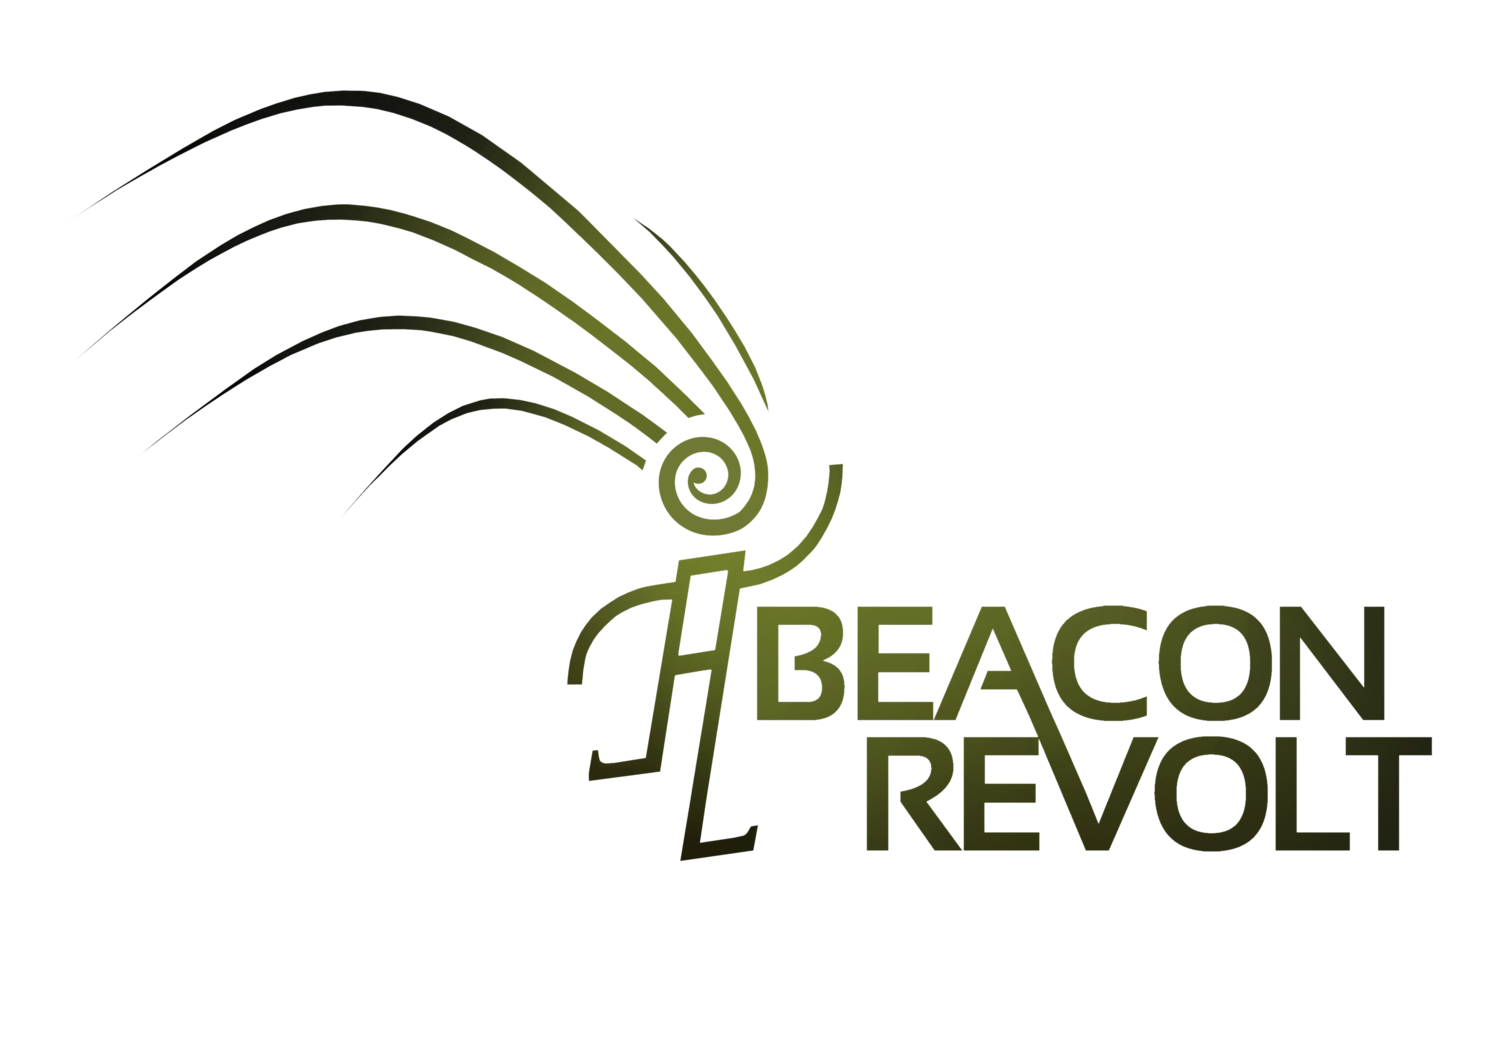 Beacon Revolt